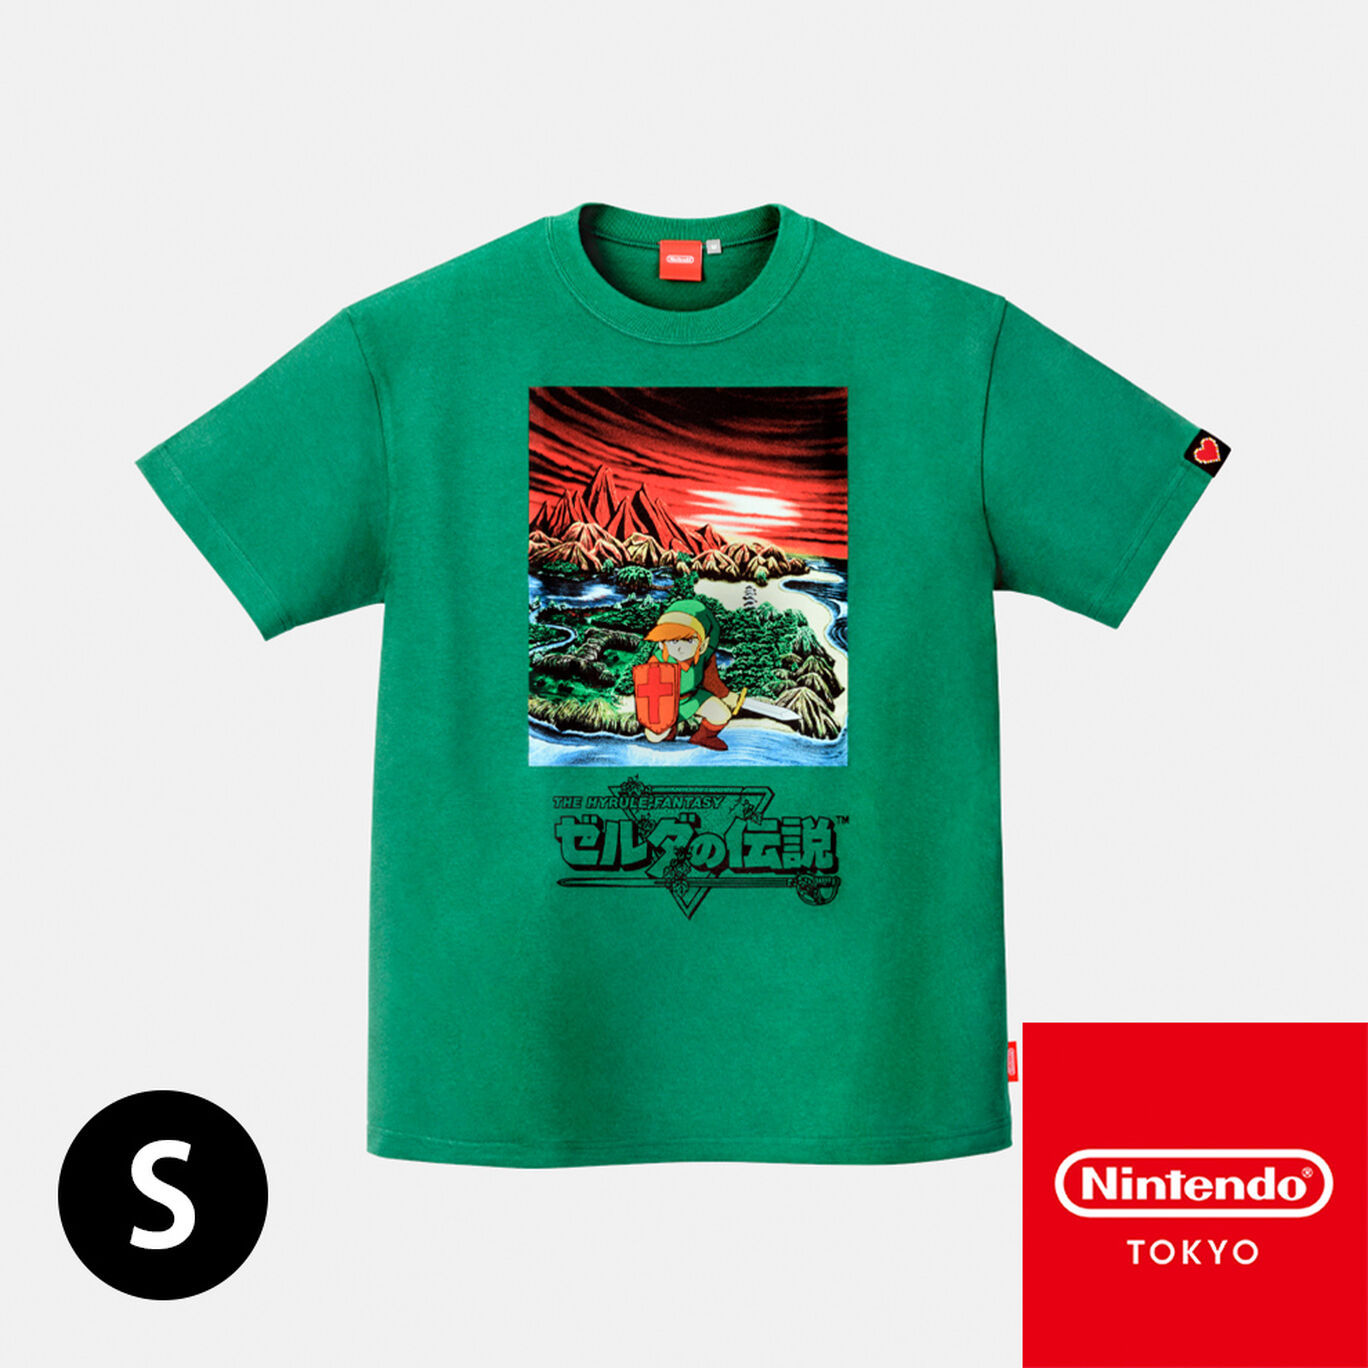 Tシャツ ゼルダの伝説 S【Nintendo TOKYO/OSAKA取り扱い商品】